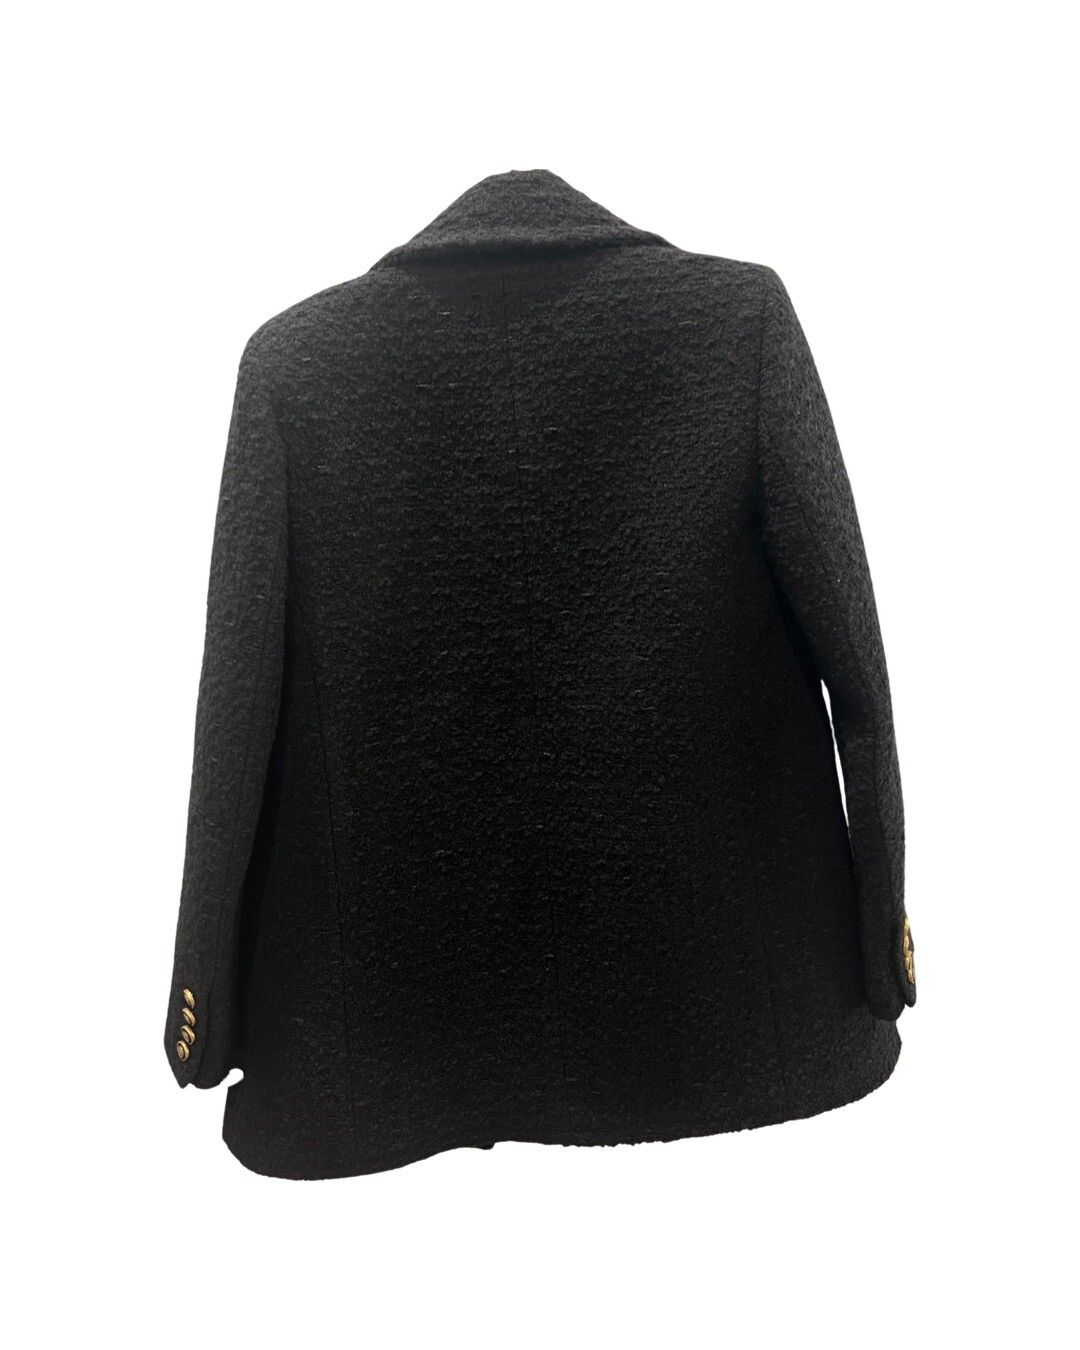 Double breasted wool bland tweed pea coat jacket - 2